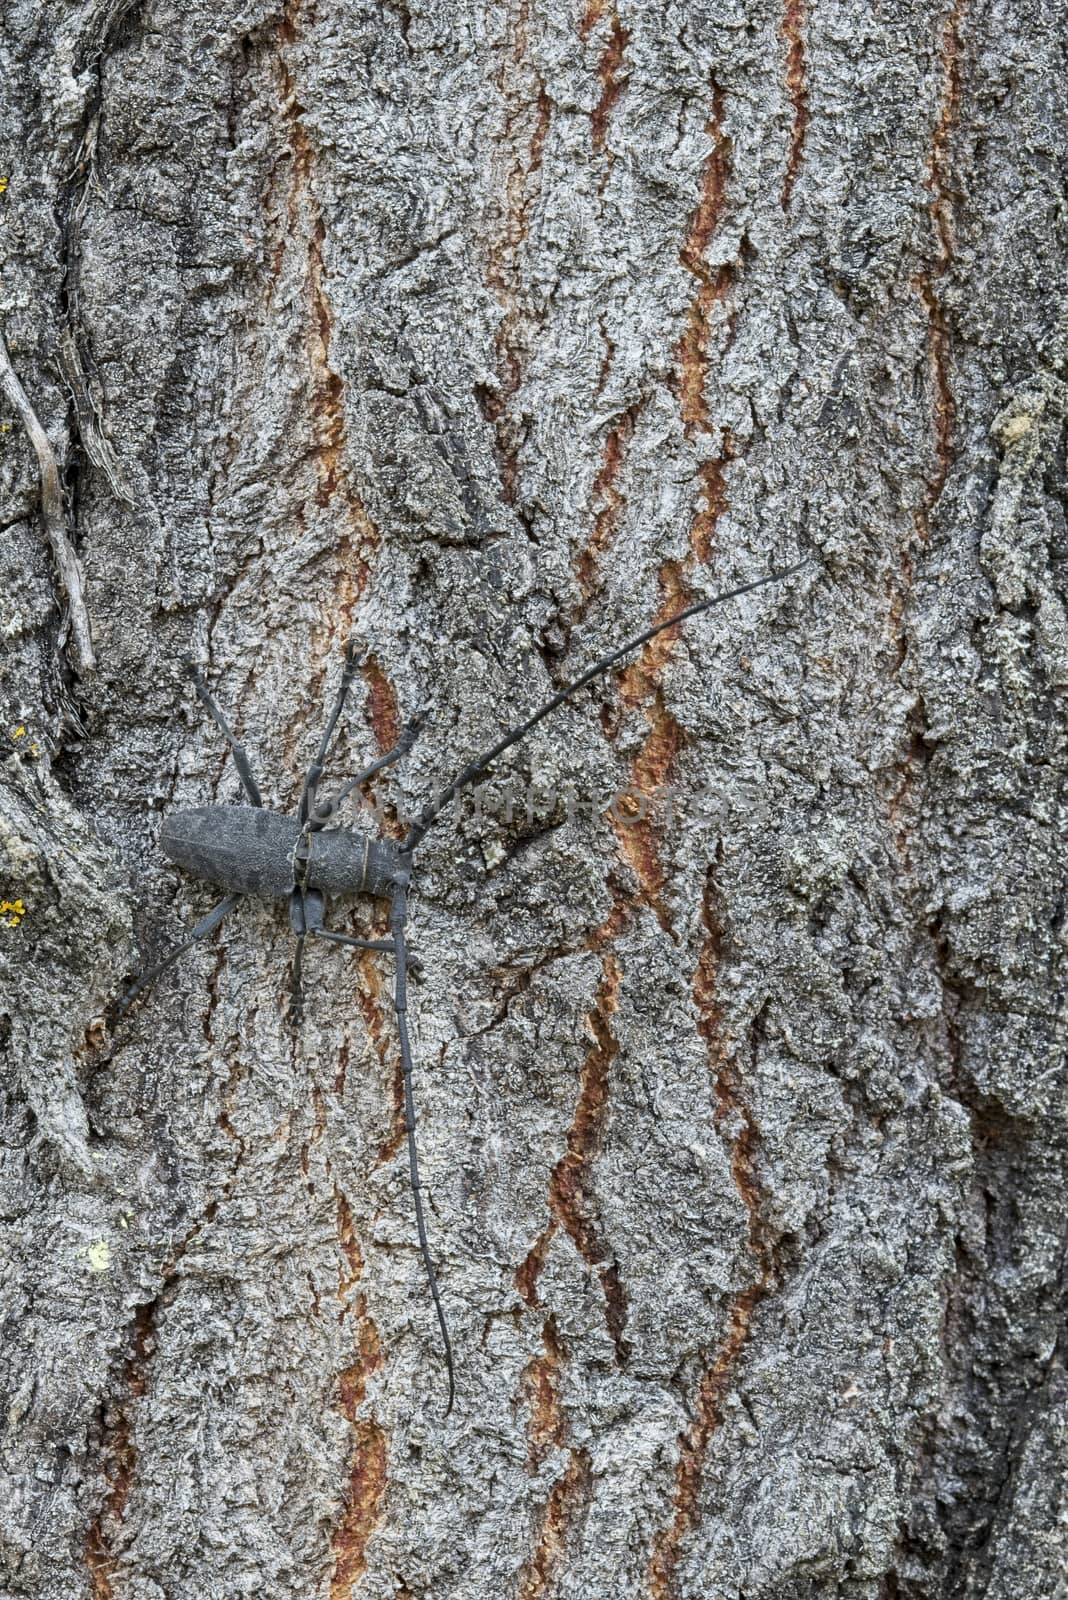 Male of longhorn beetle, Morinus asper, on tree bark with lichens.